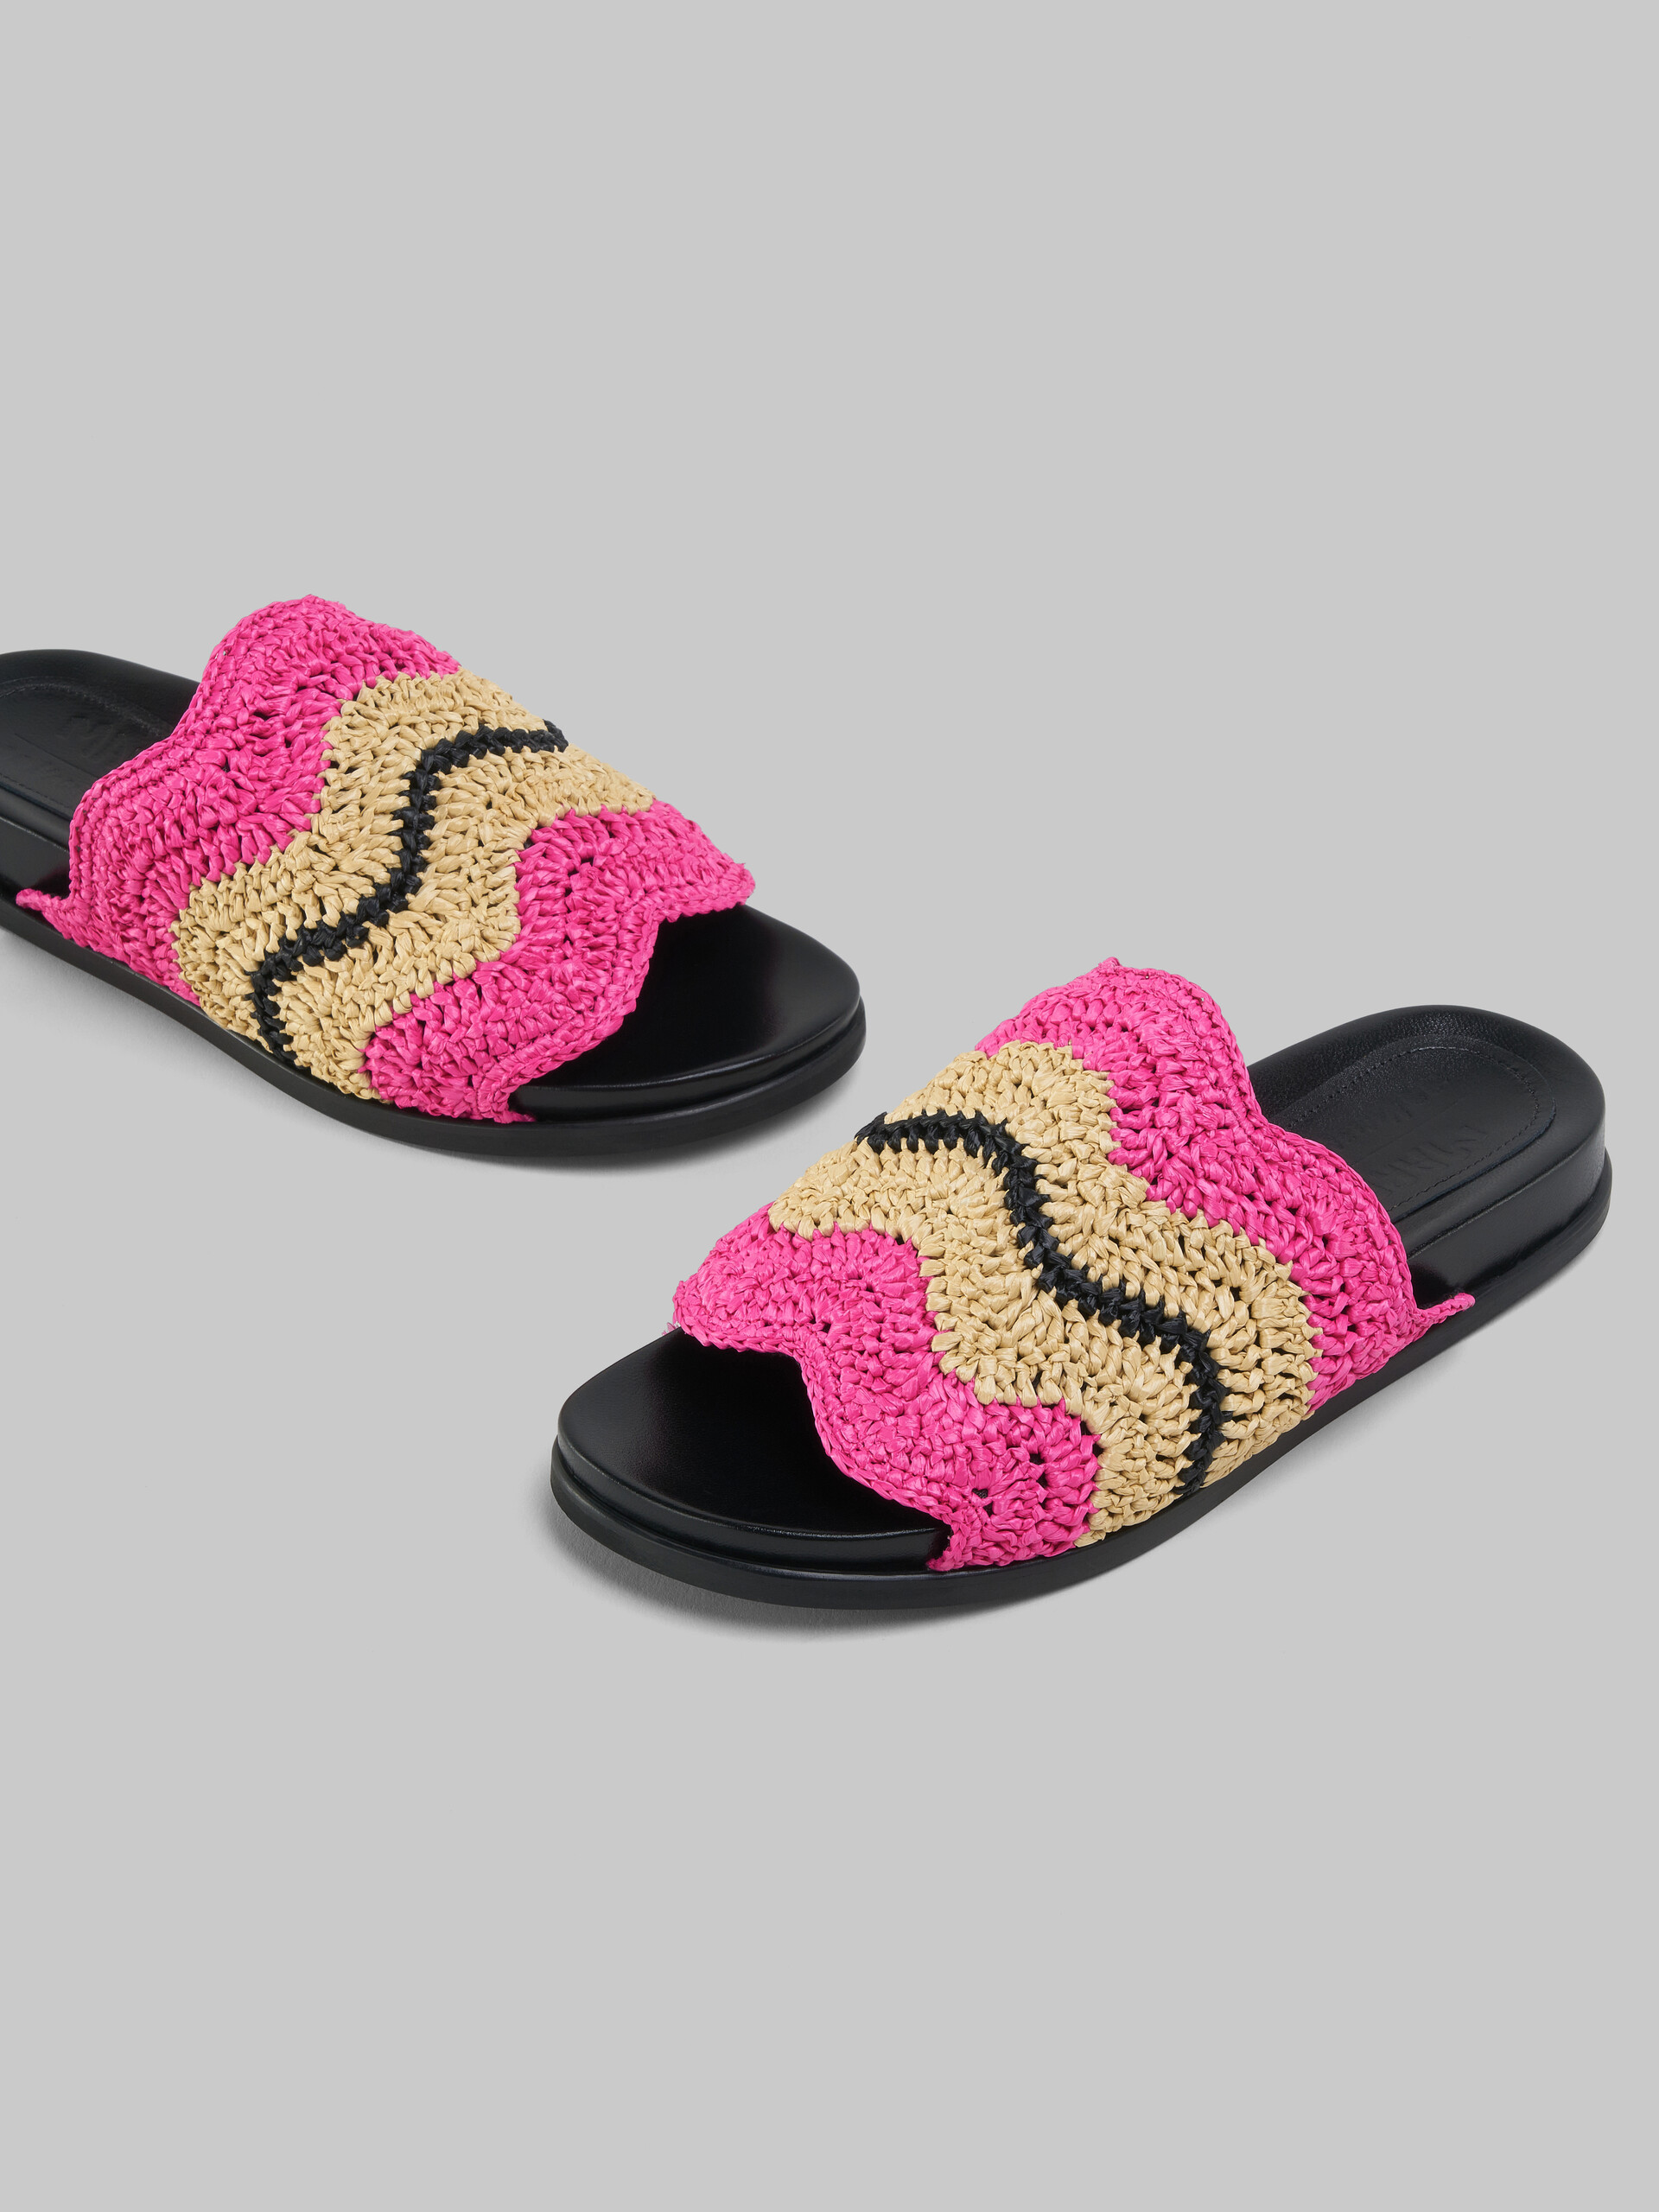 Marni x No Vacancy Inn - Fuchsia crochet raffia slide - Sandals - Image 5